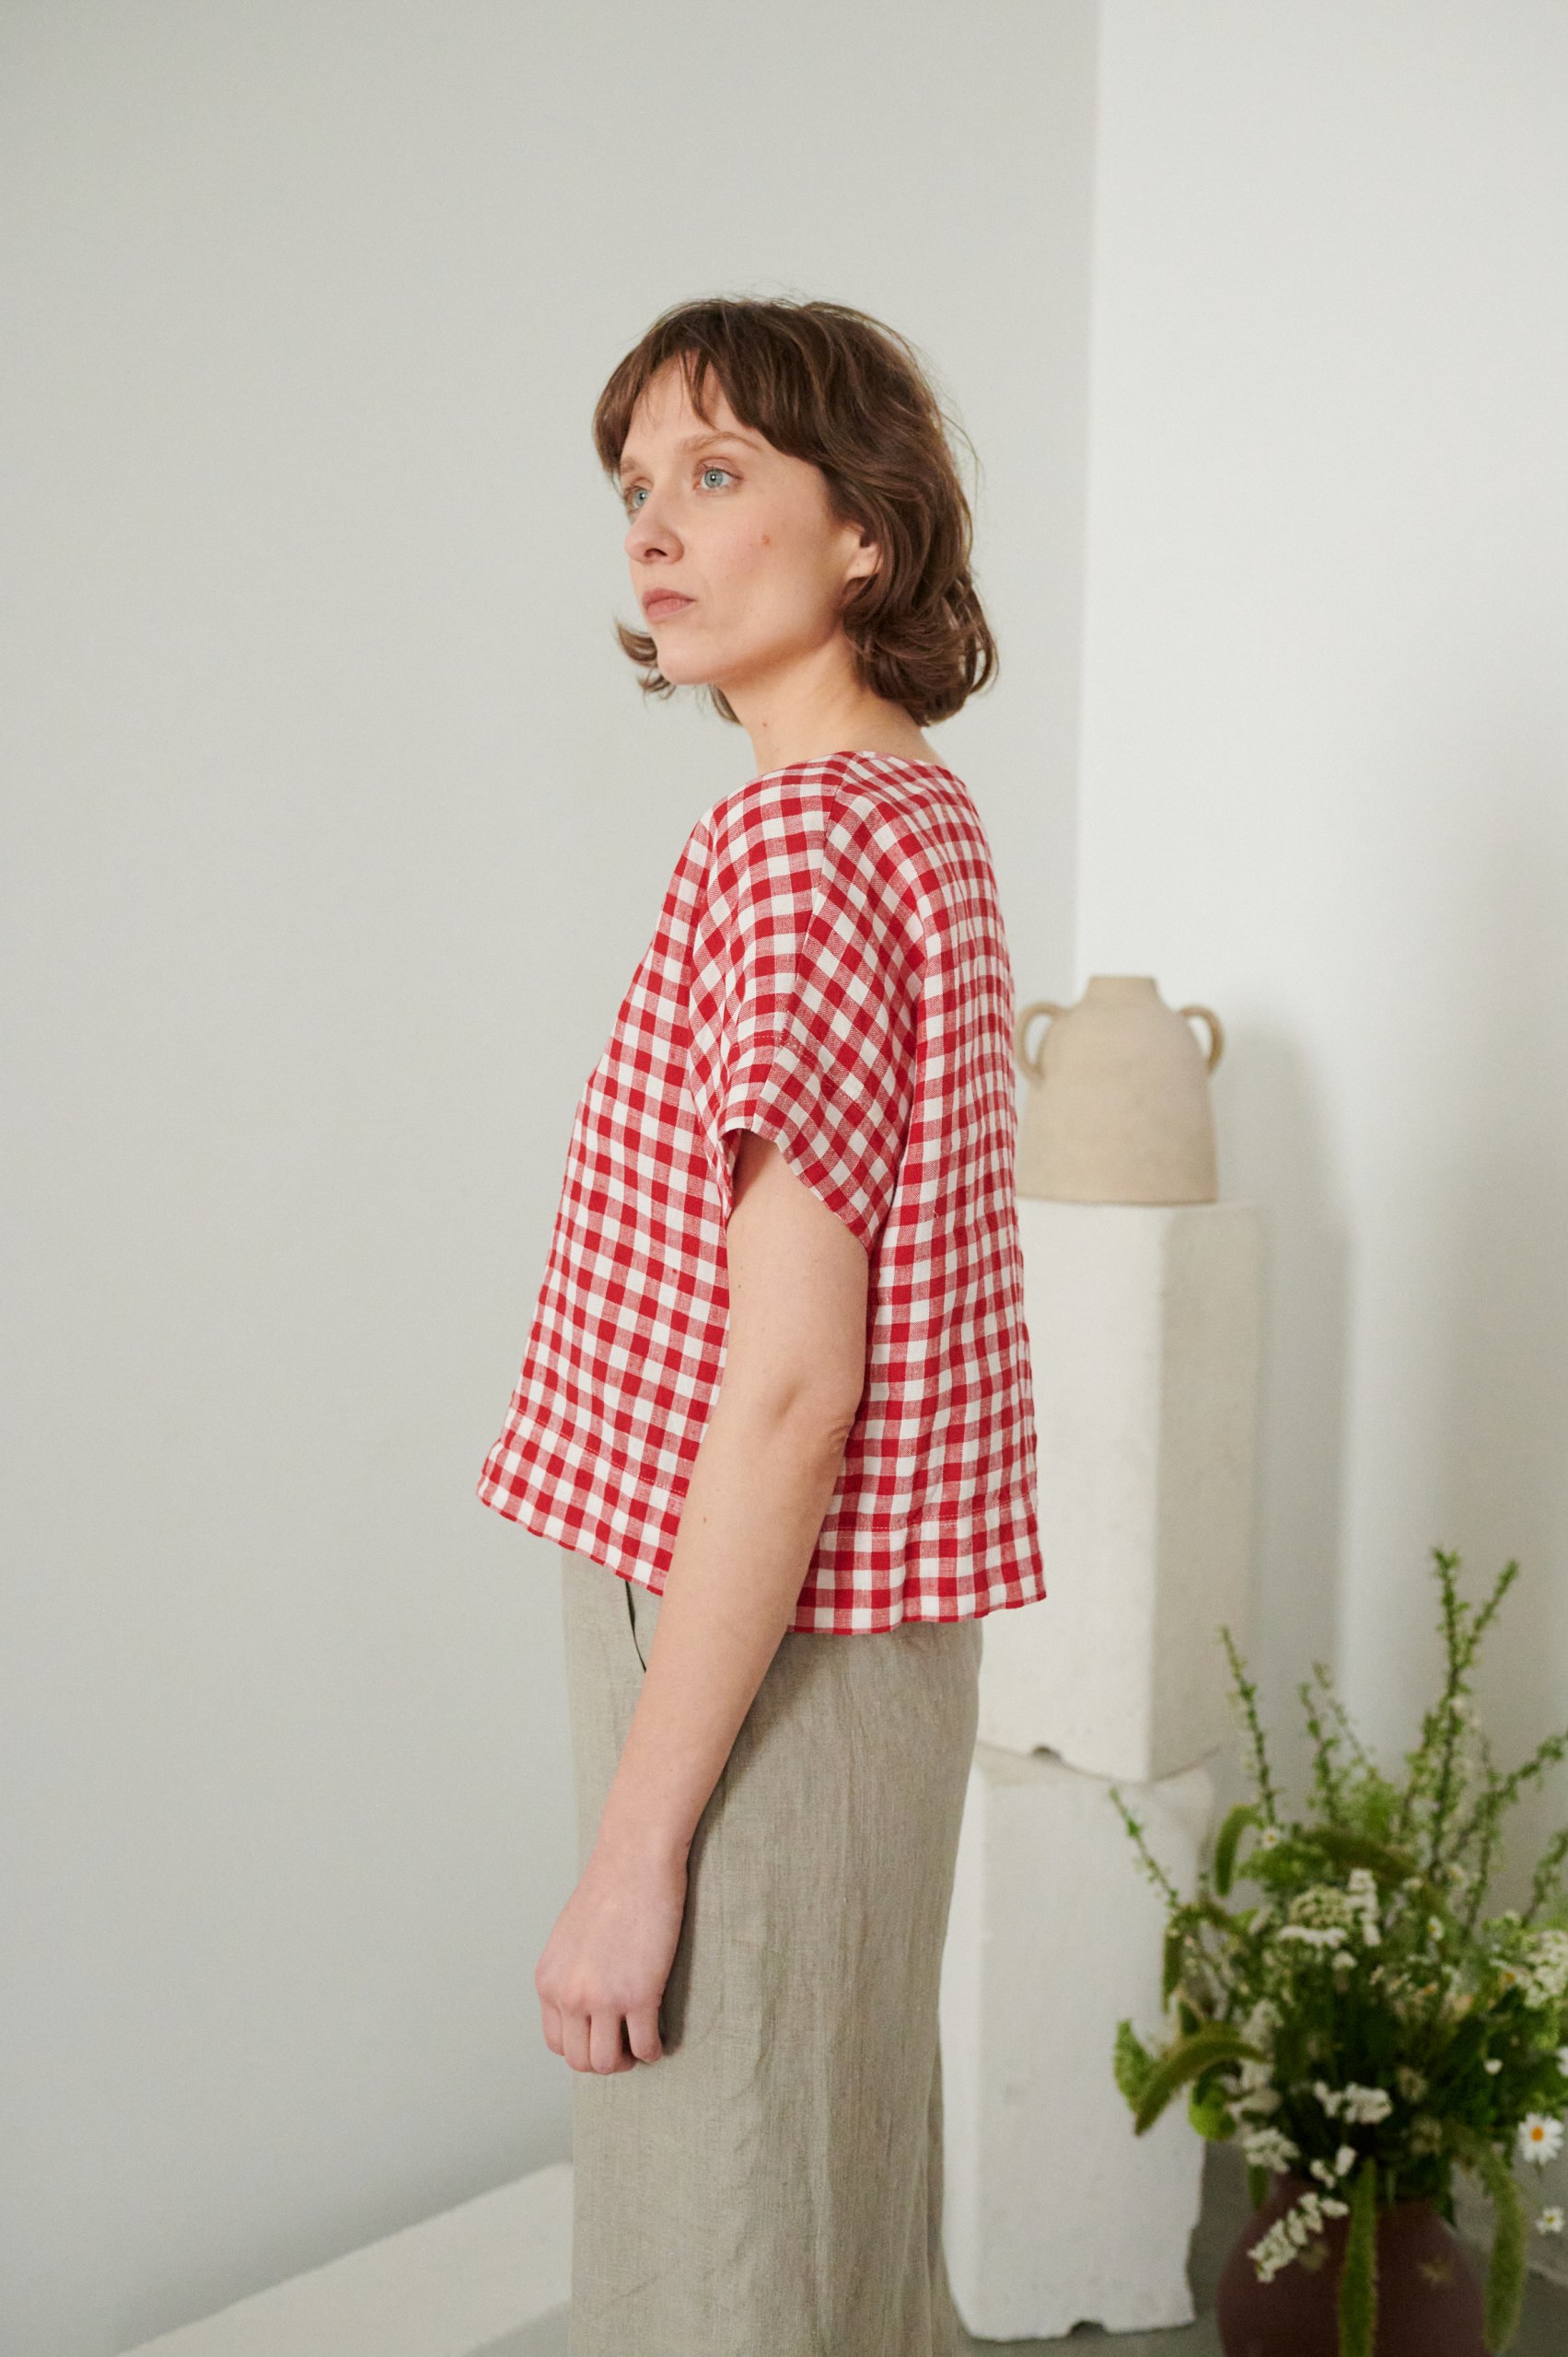 Linenfox model wearing a short sleeve boxy linen top in red gingham